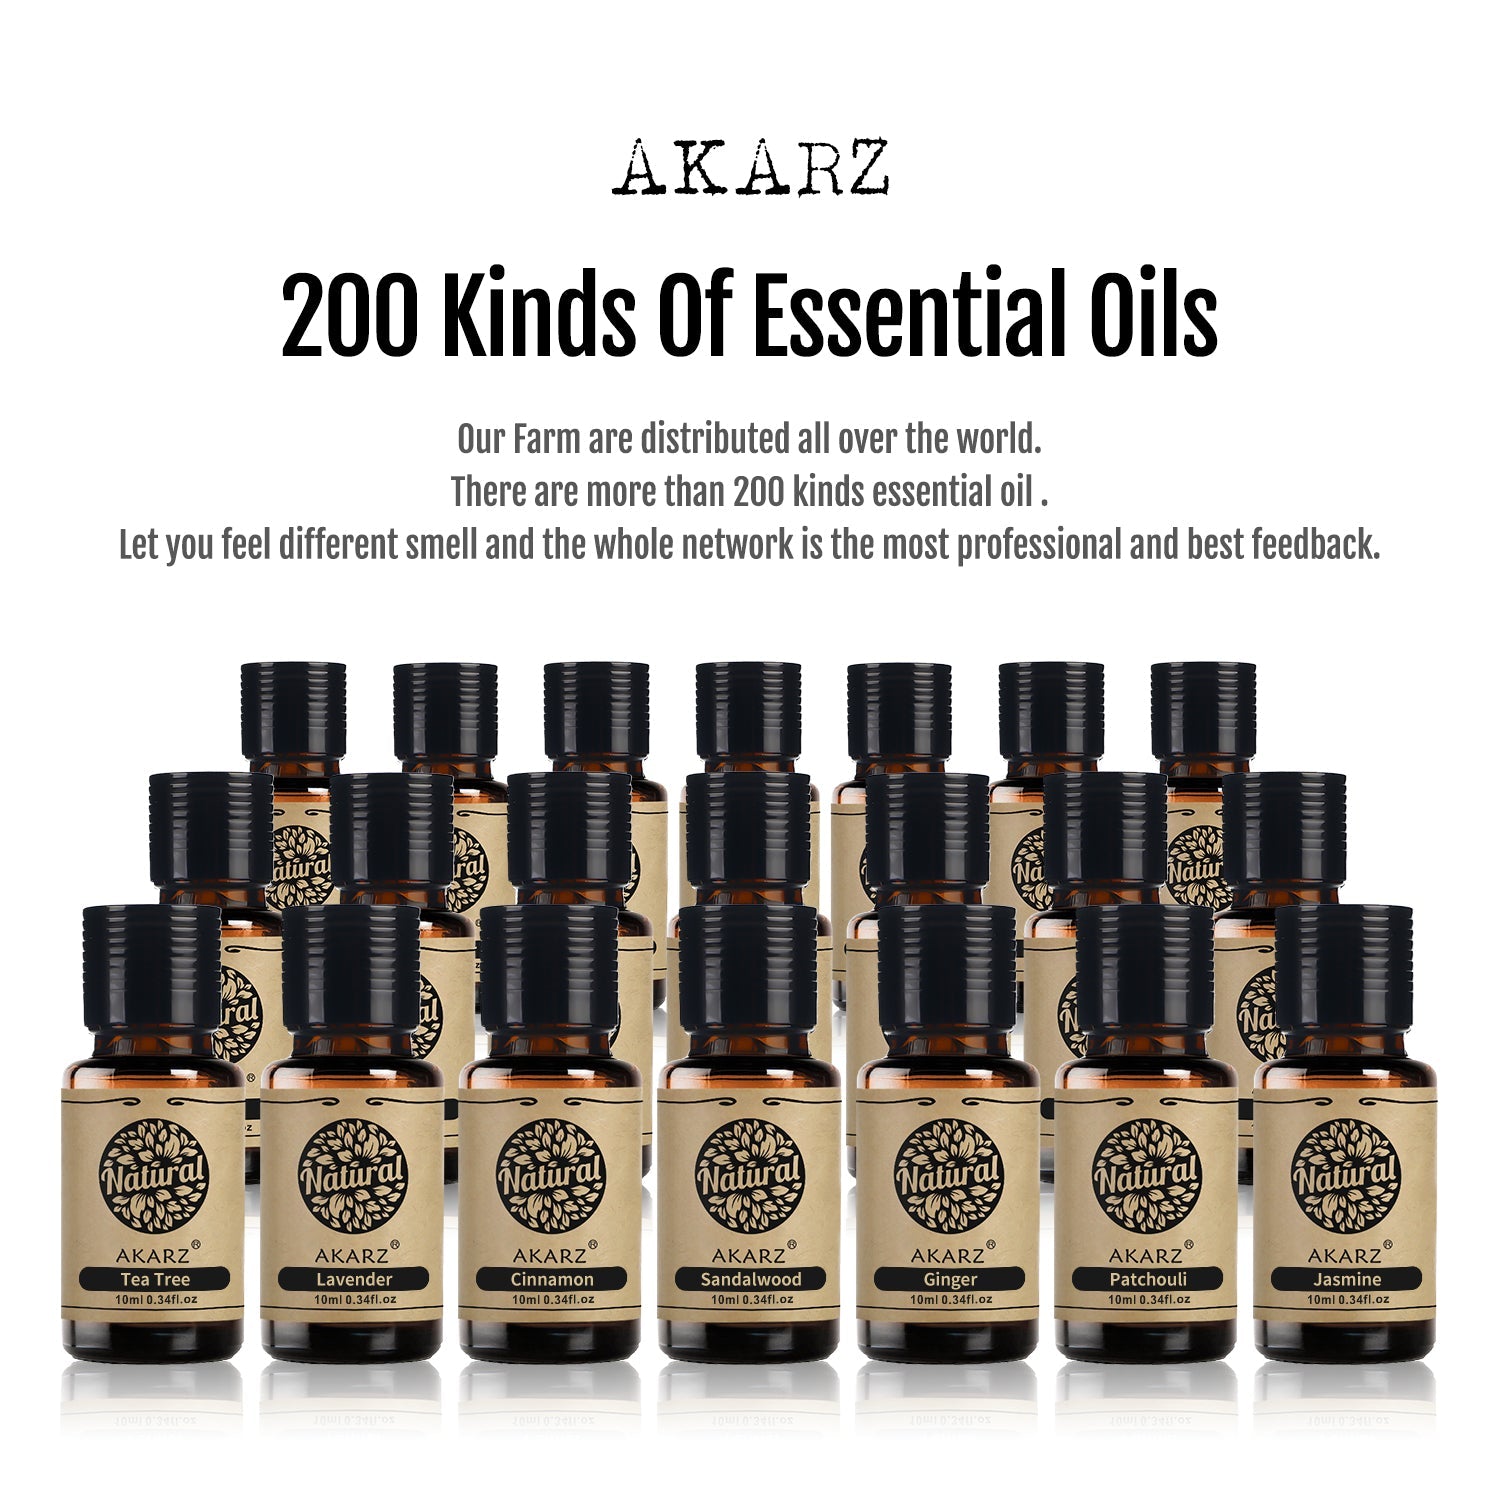 Orris Essential Oil AKARZ Natural And Pure (30ML,100ML )